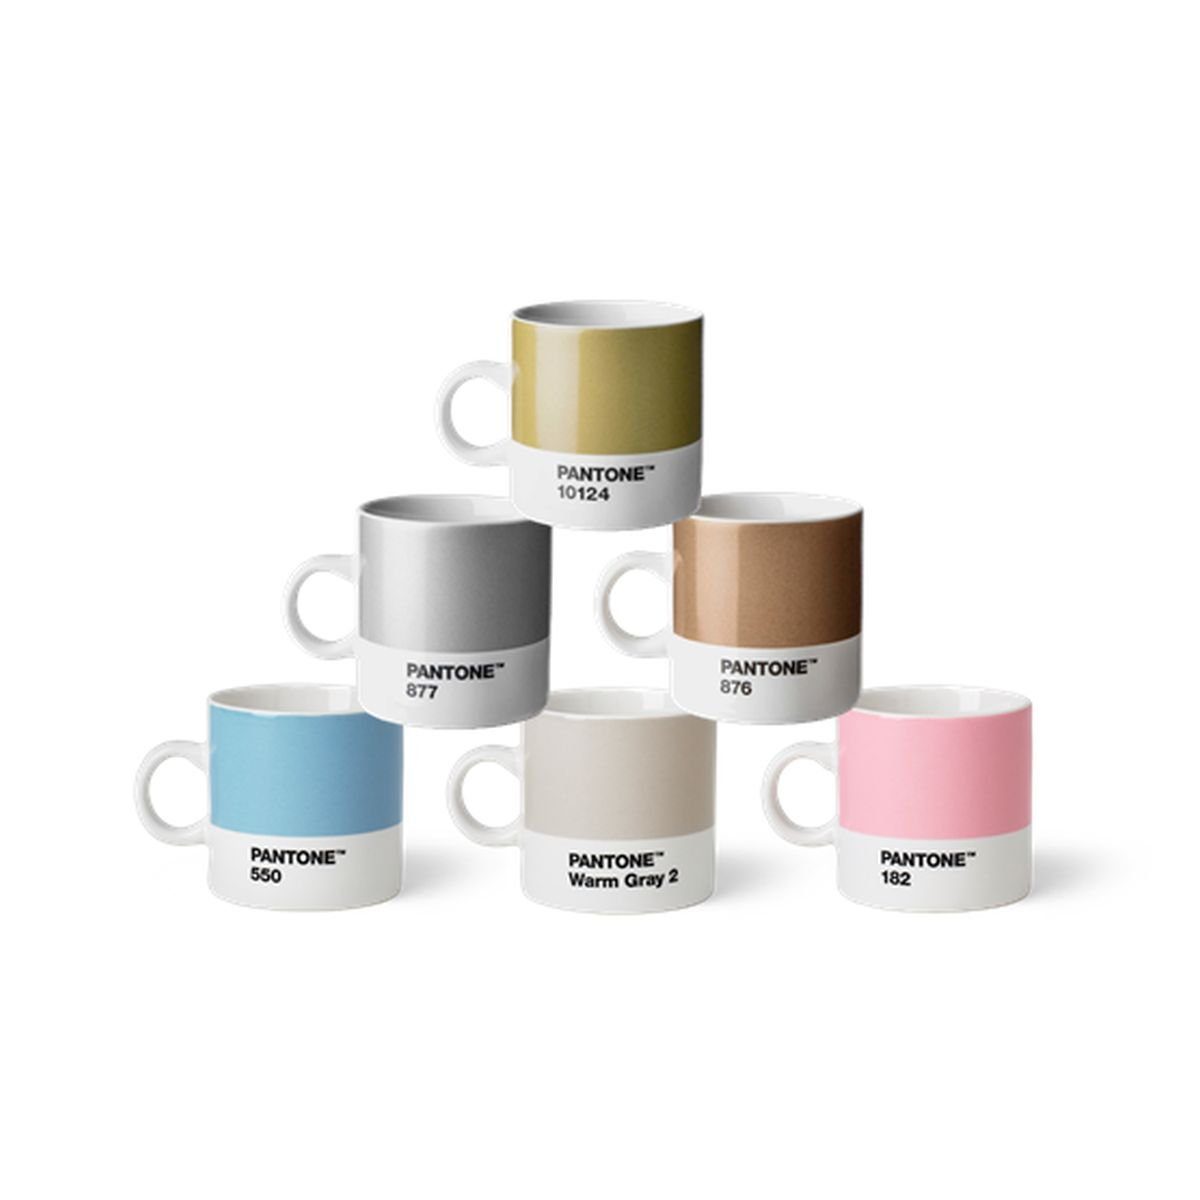 Pantone Universe Espressotasse Set Pastell, Porzellan, 6-teilig Pastell- und Metalltöne | Kaffeeservice